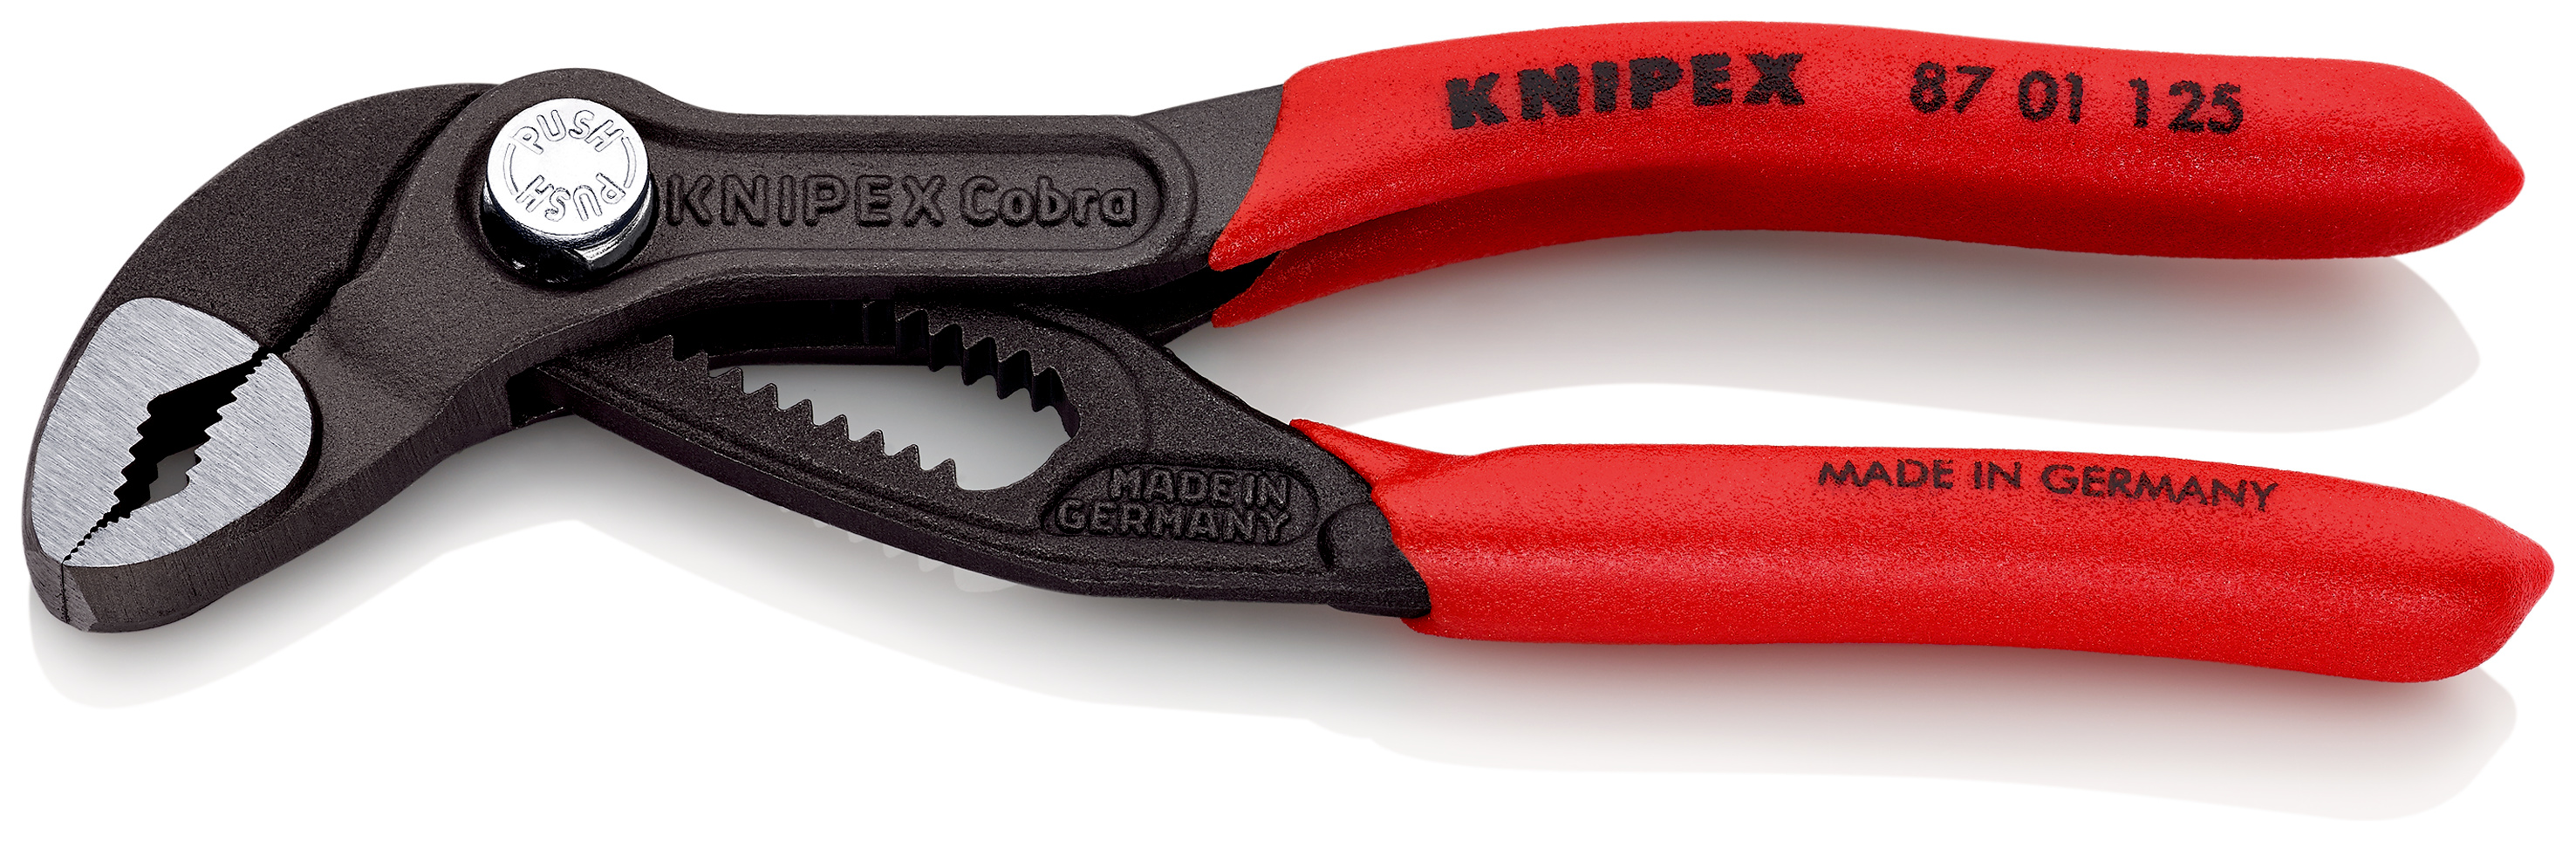 Knipex Cobra 87 01 125 Mini-pince multiprise poignées plastifiées 125 mm 